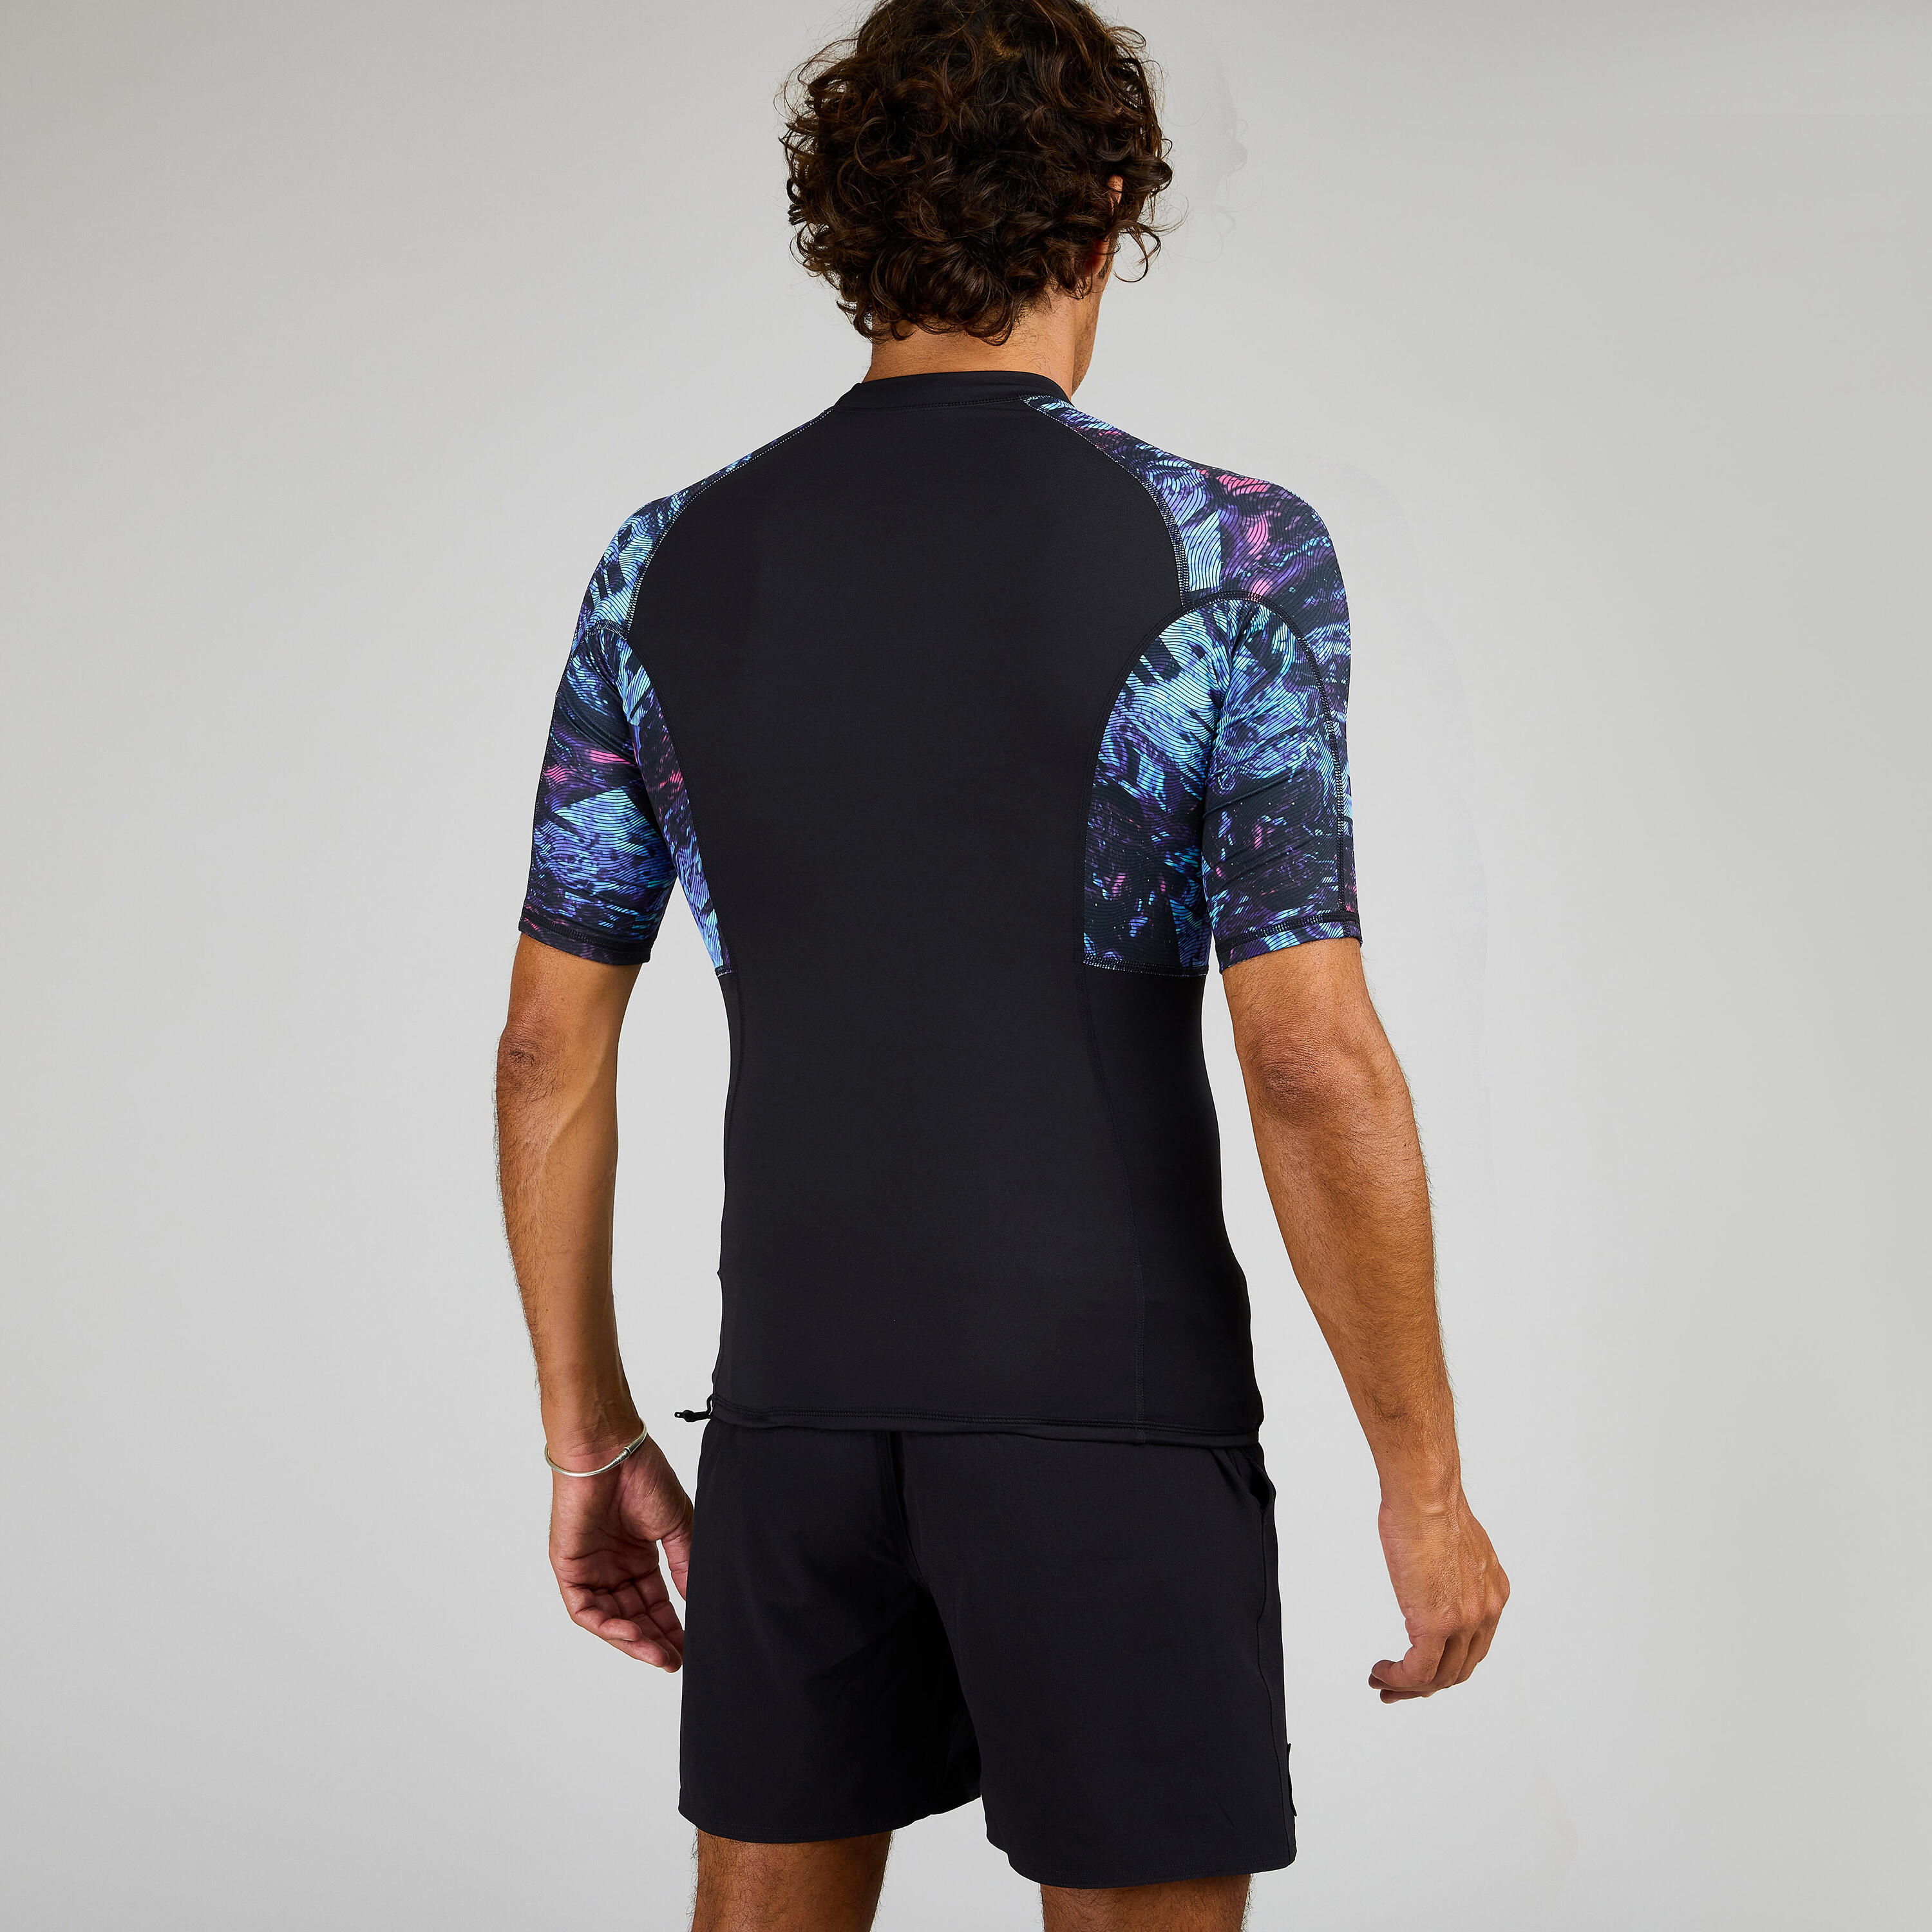 Men's surfing short-sleeved anti-UV Vortex T-shirt top 2/7